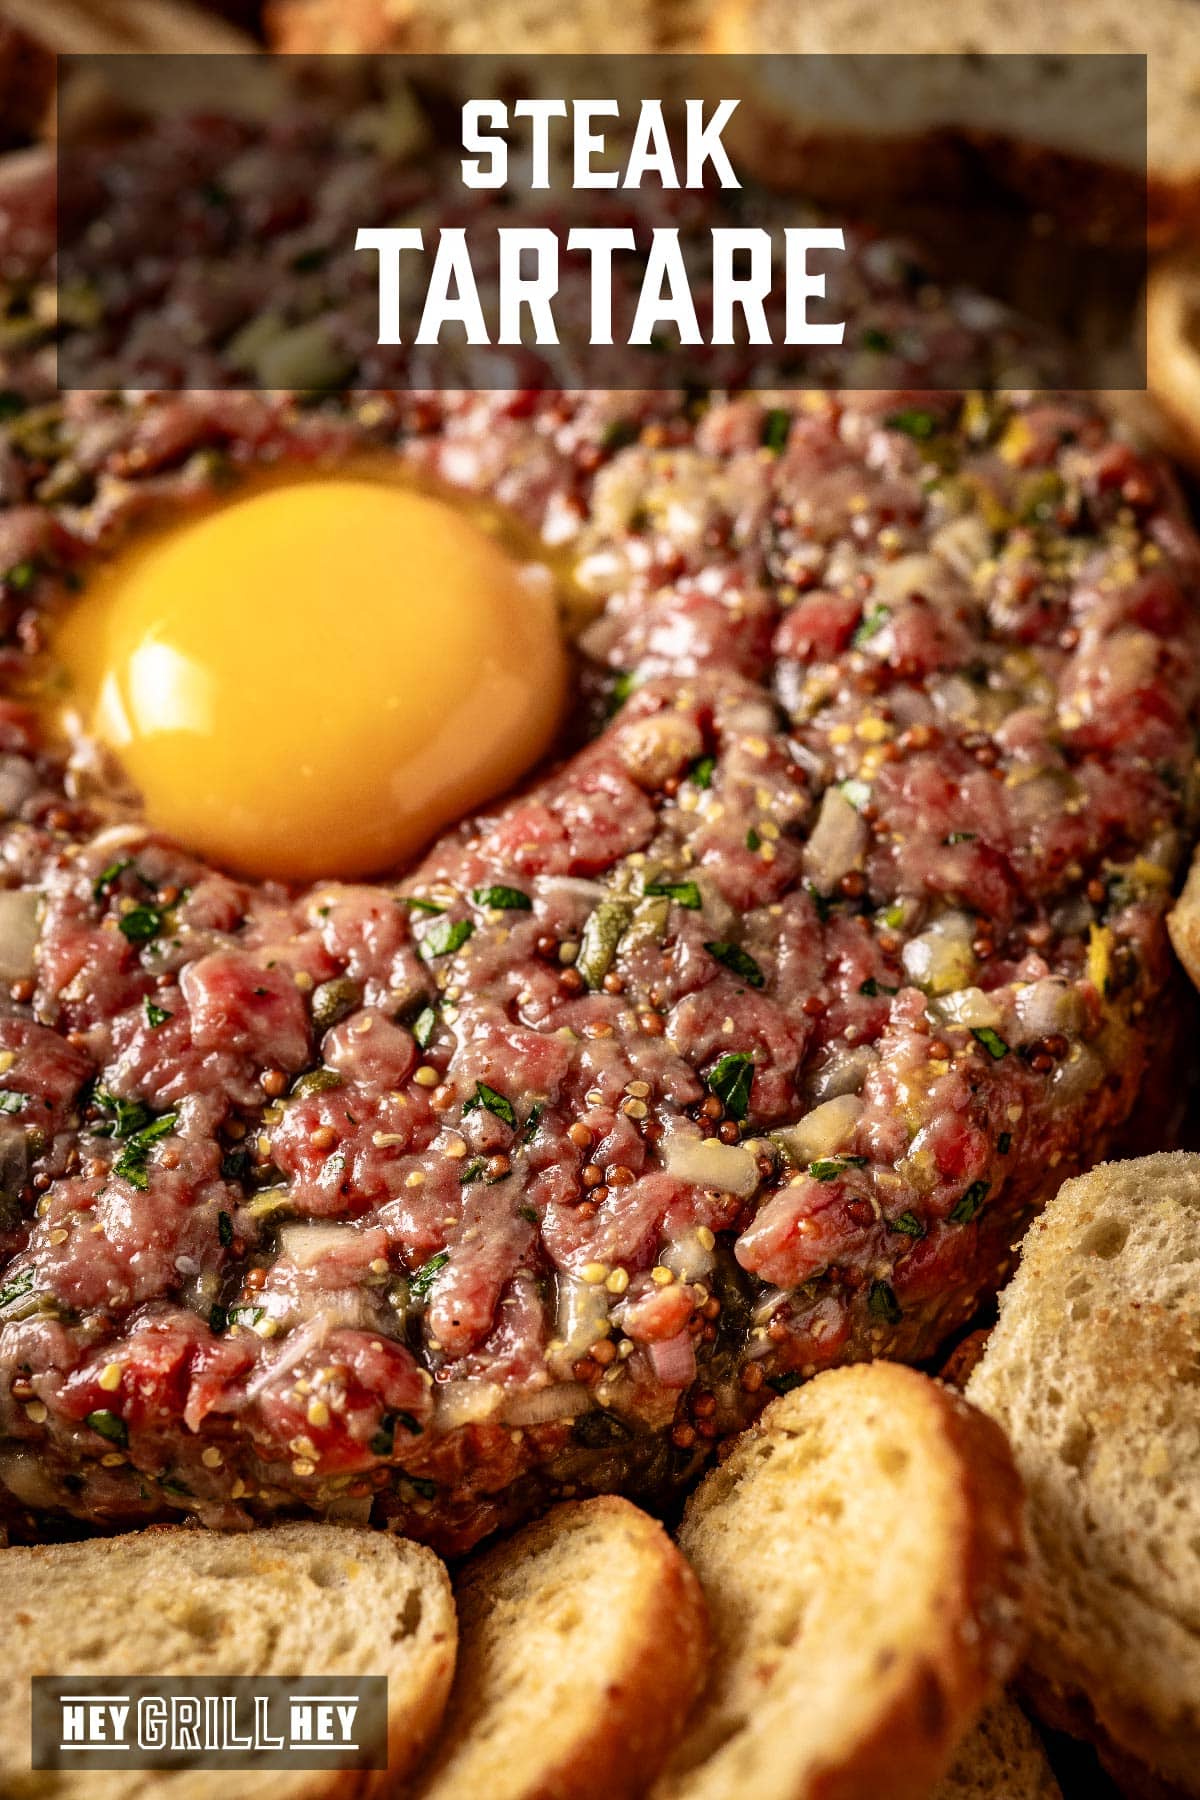 Steak tartare with egg yolk on top next to hard bread. Text reads "Steak Tartare".